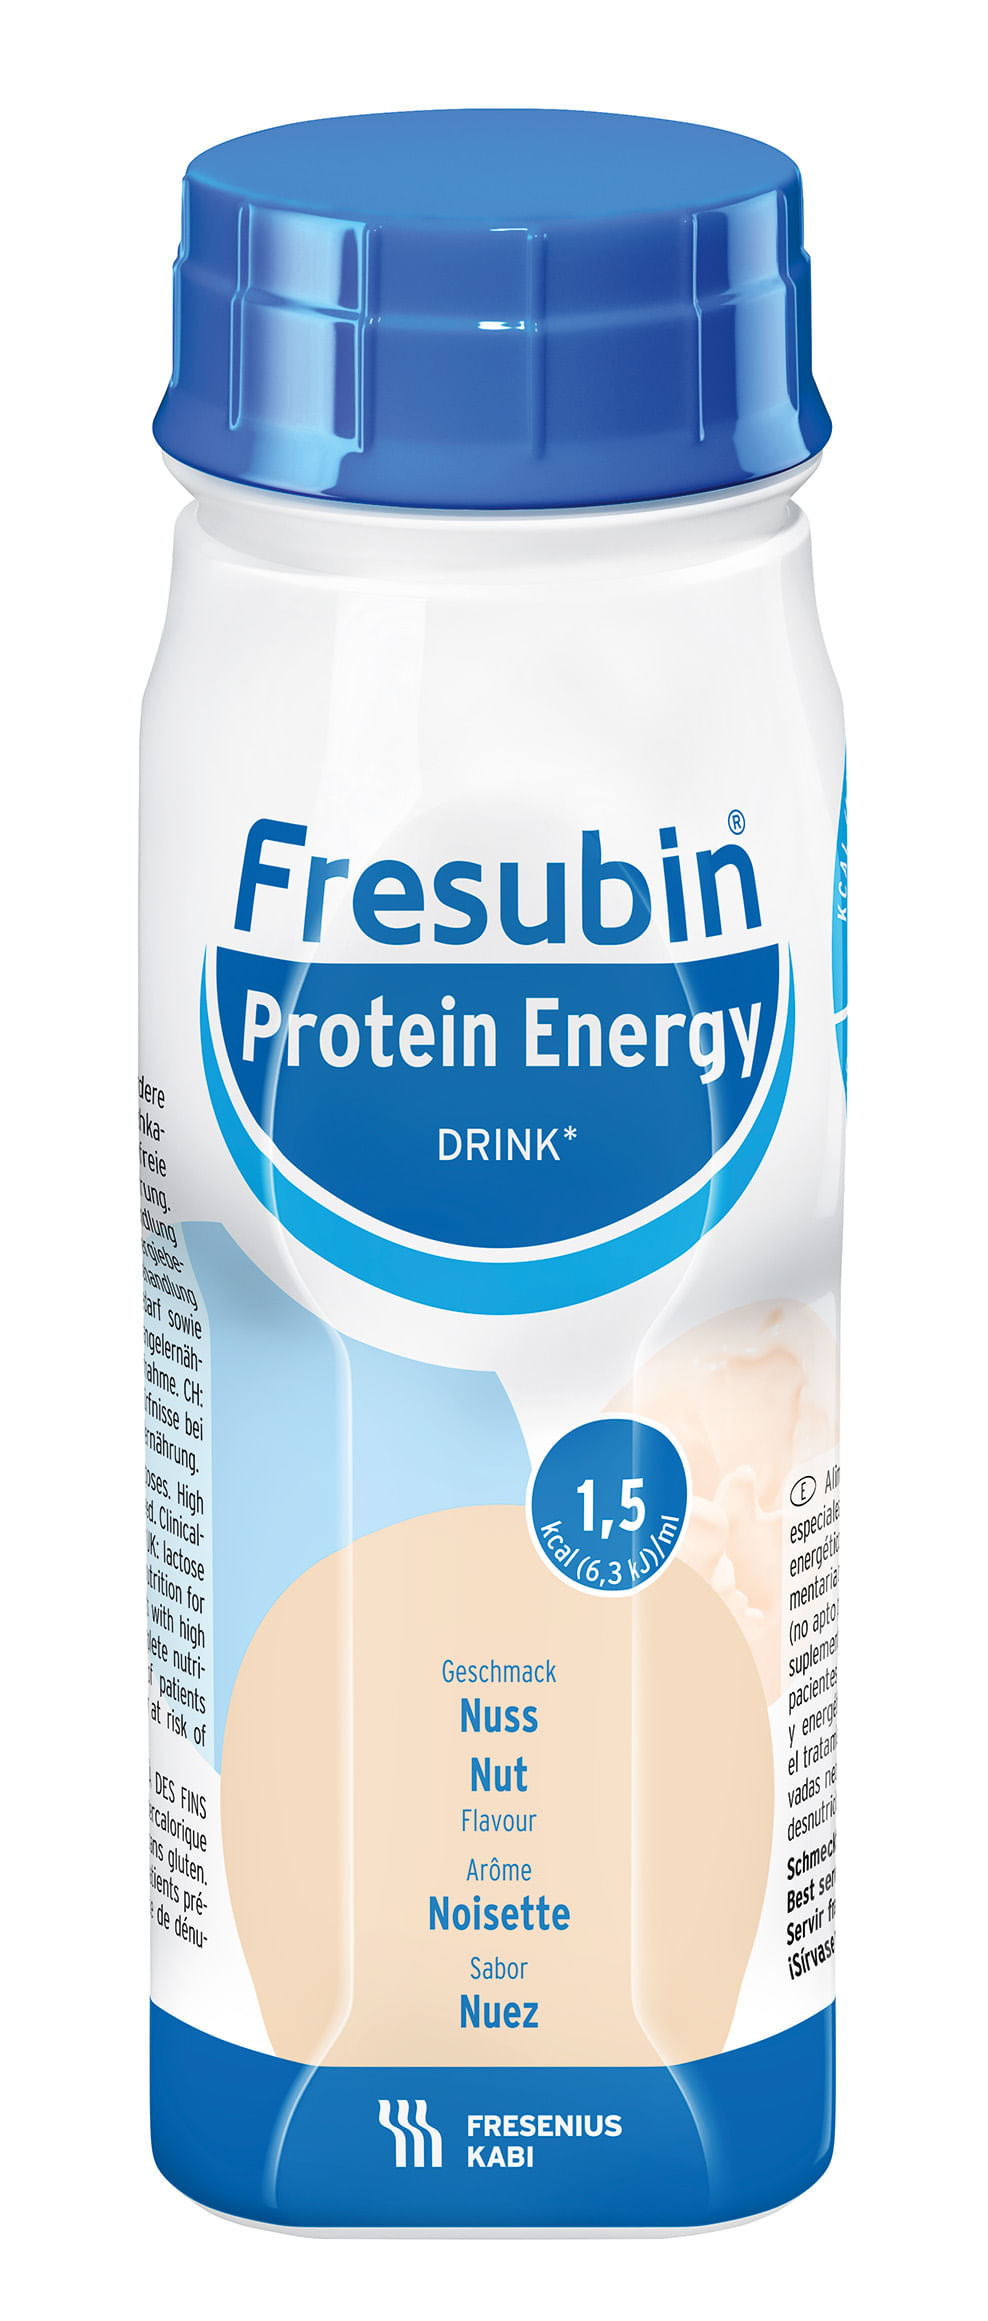 Fresubin_Protein_Energy_Nut_EBo_Frontal